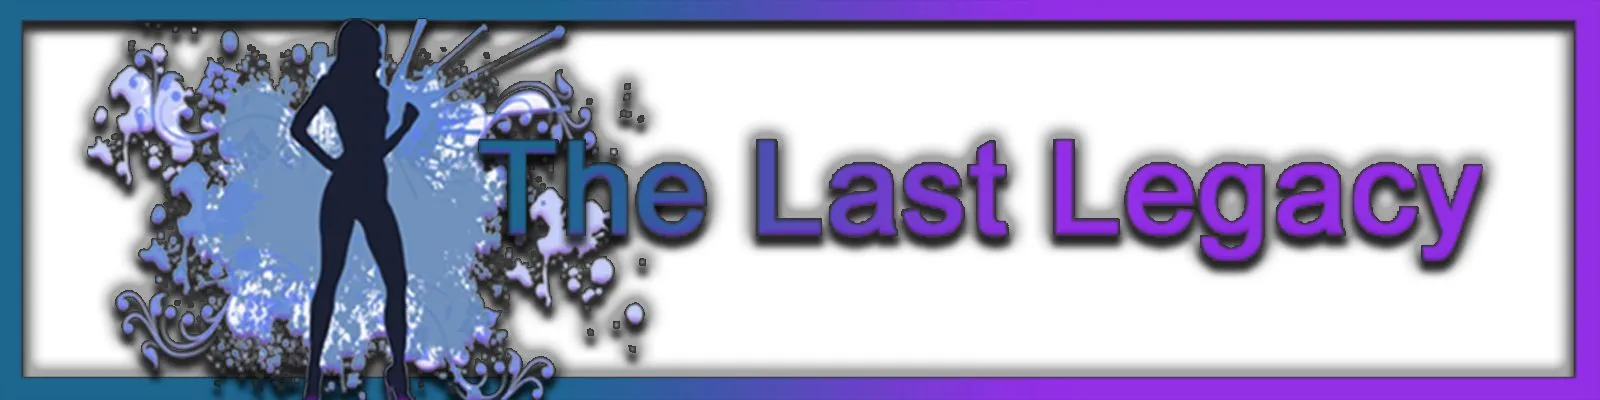 The Last Legacy - Rebuild [v0.01 Xmas] main image